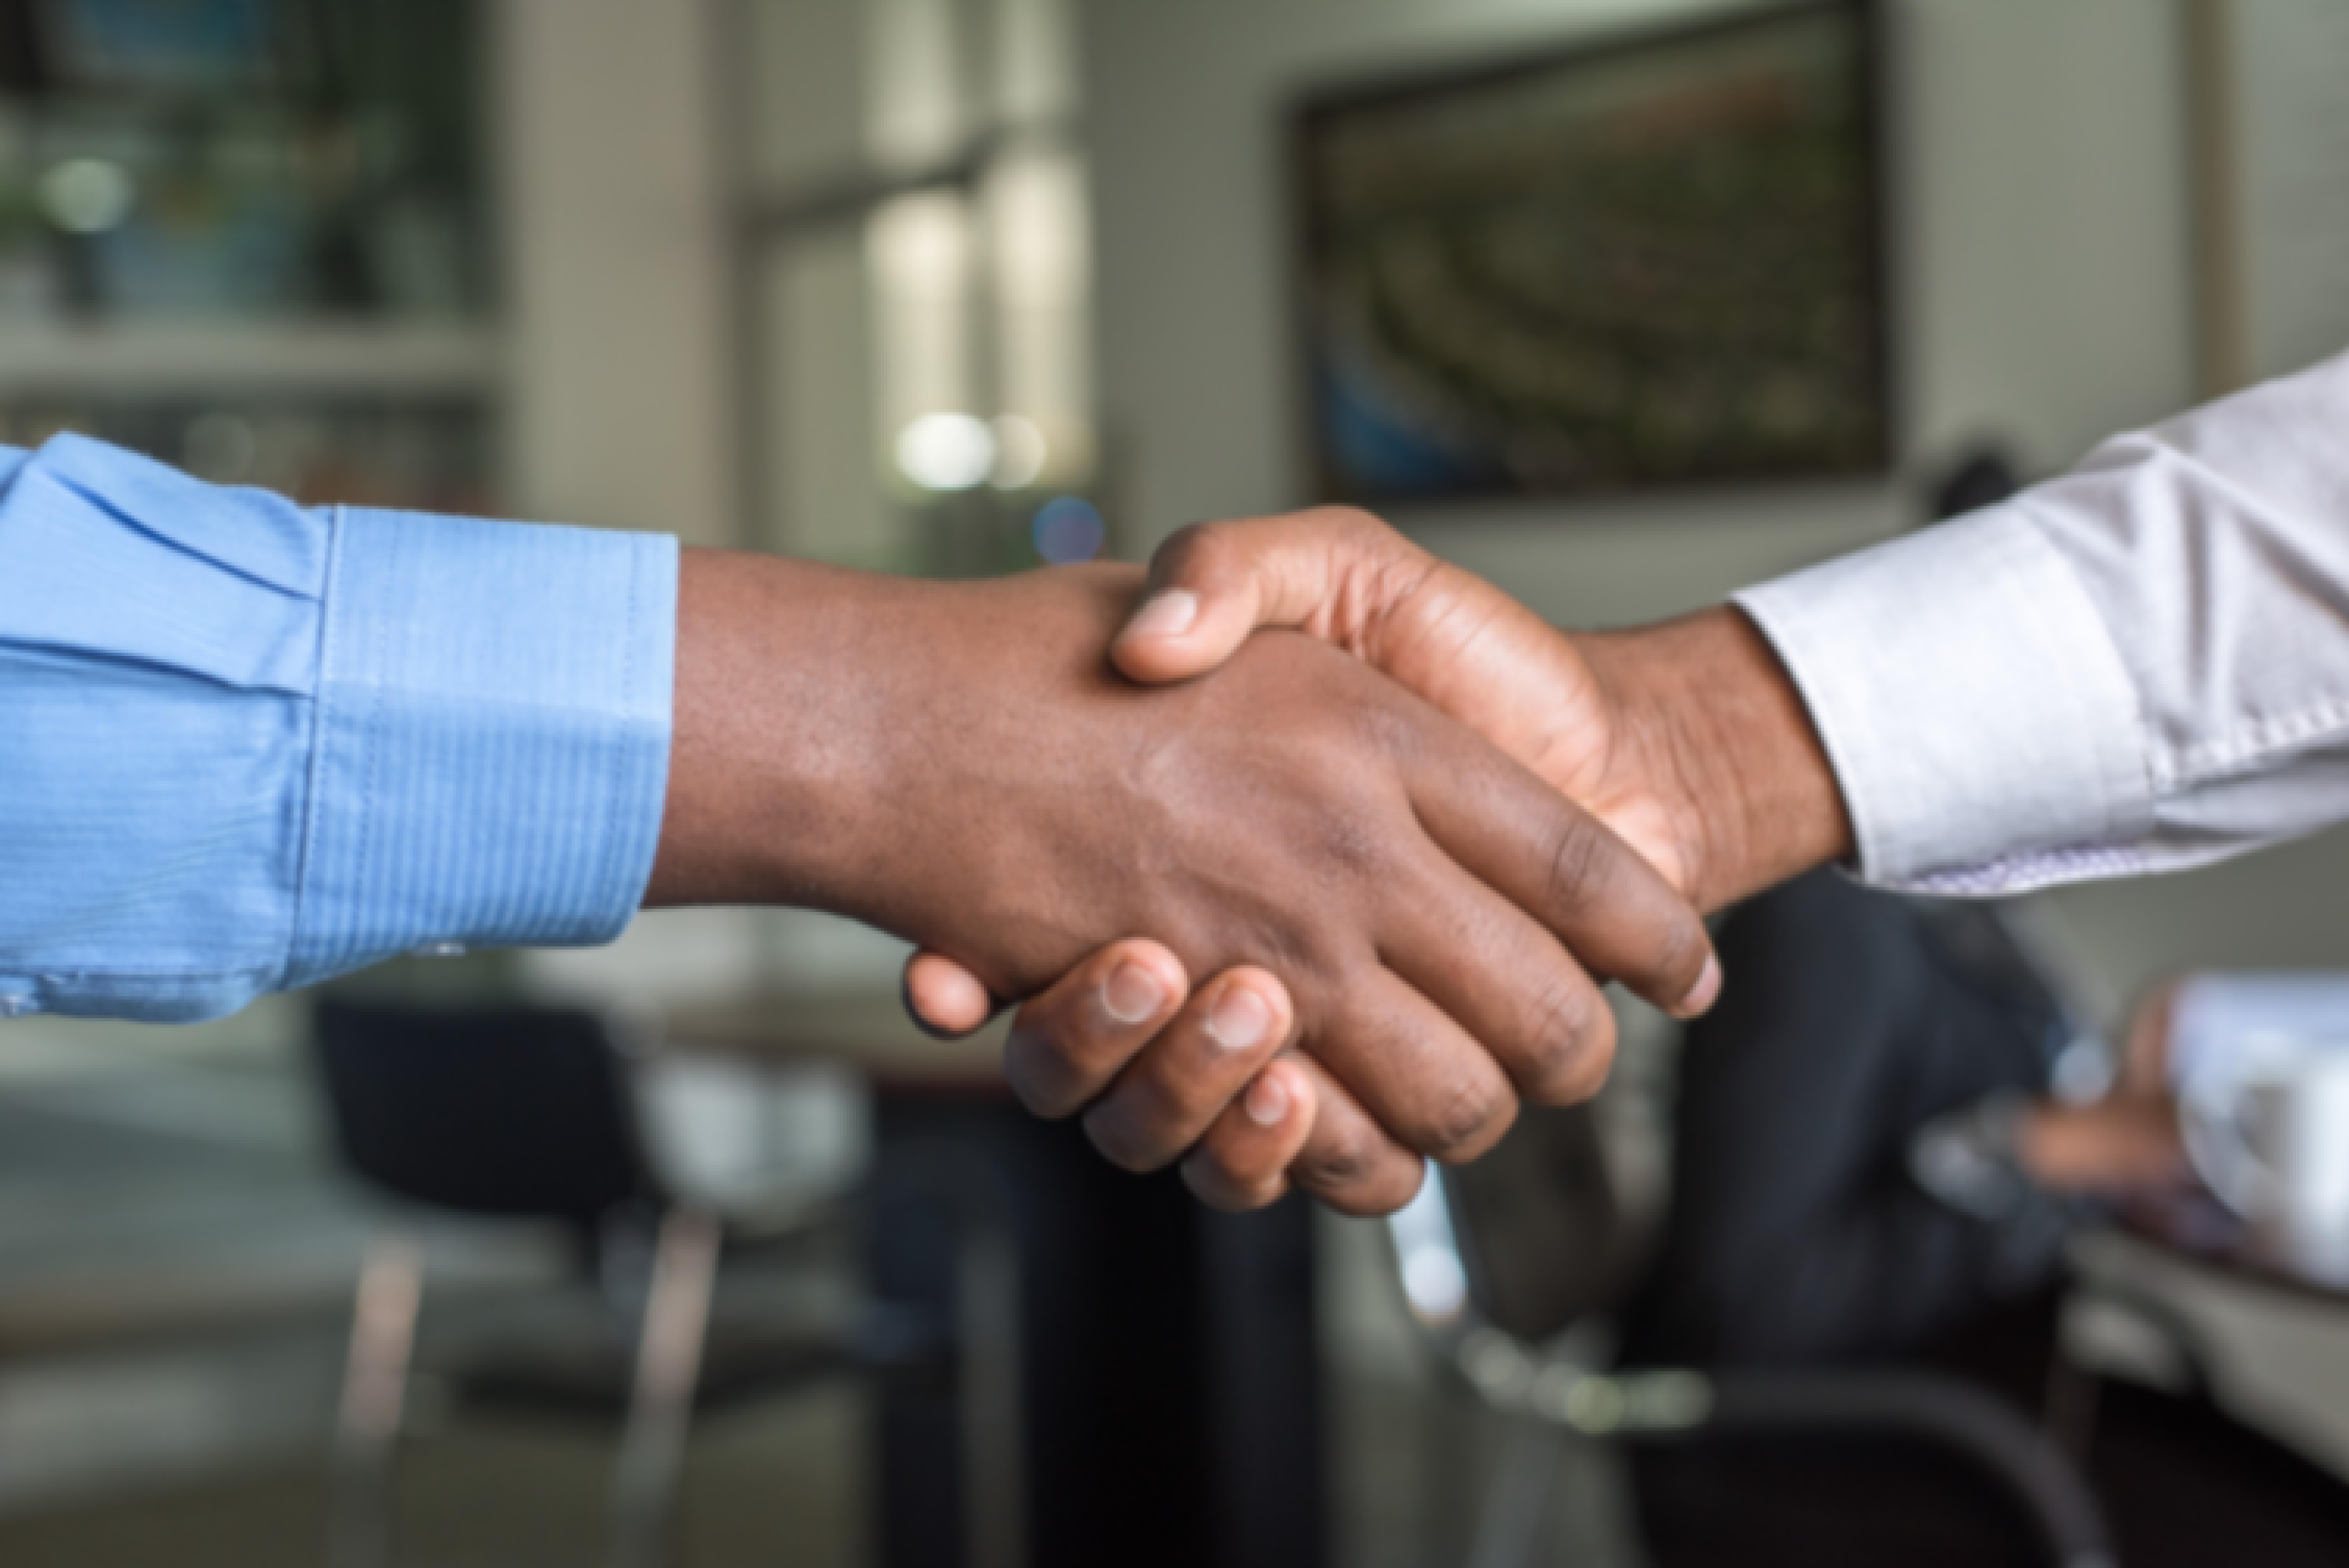 A partnership agreement hand shake